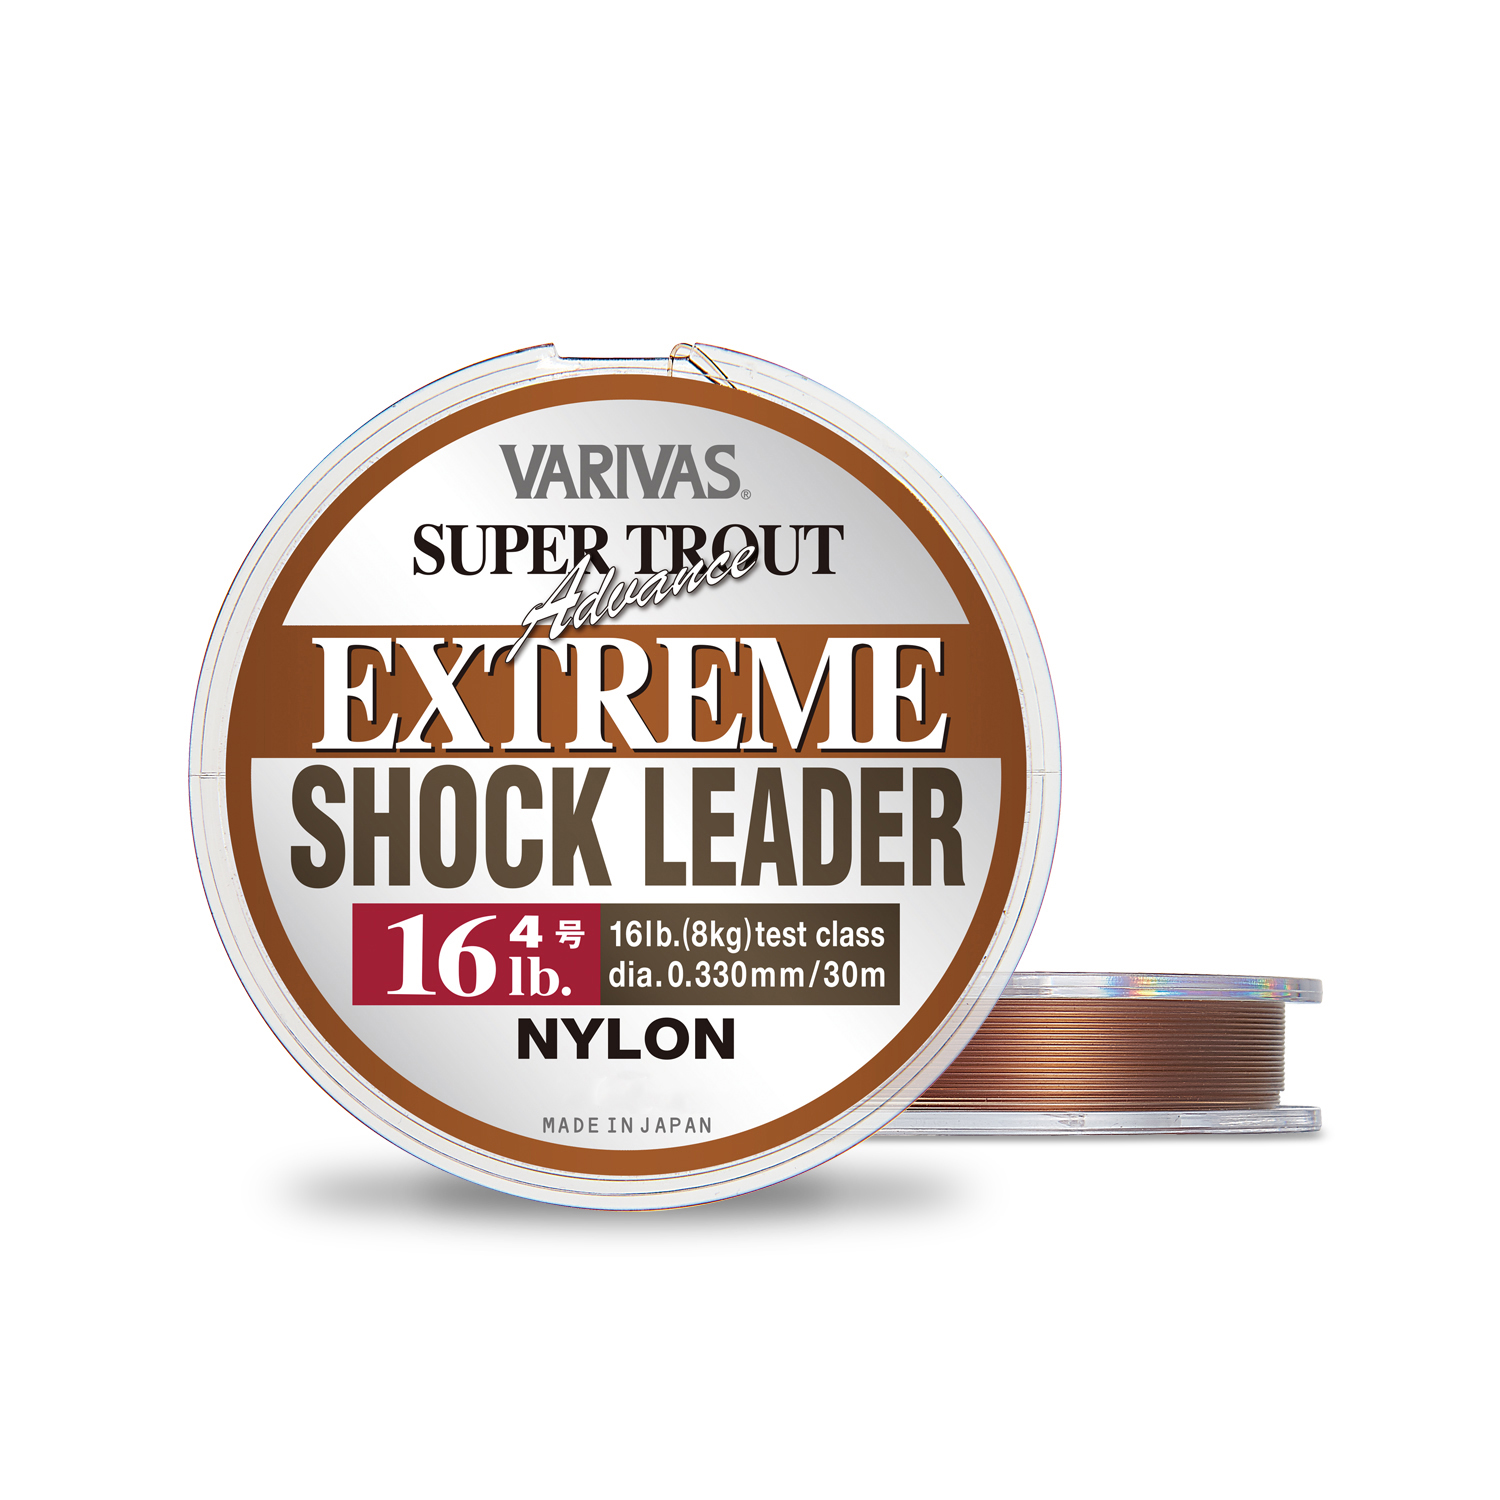 Super Trout AdvanceExtreme Shock Leader [Nylon]